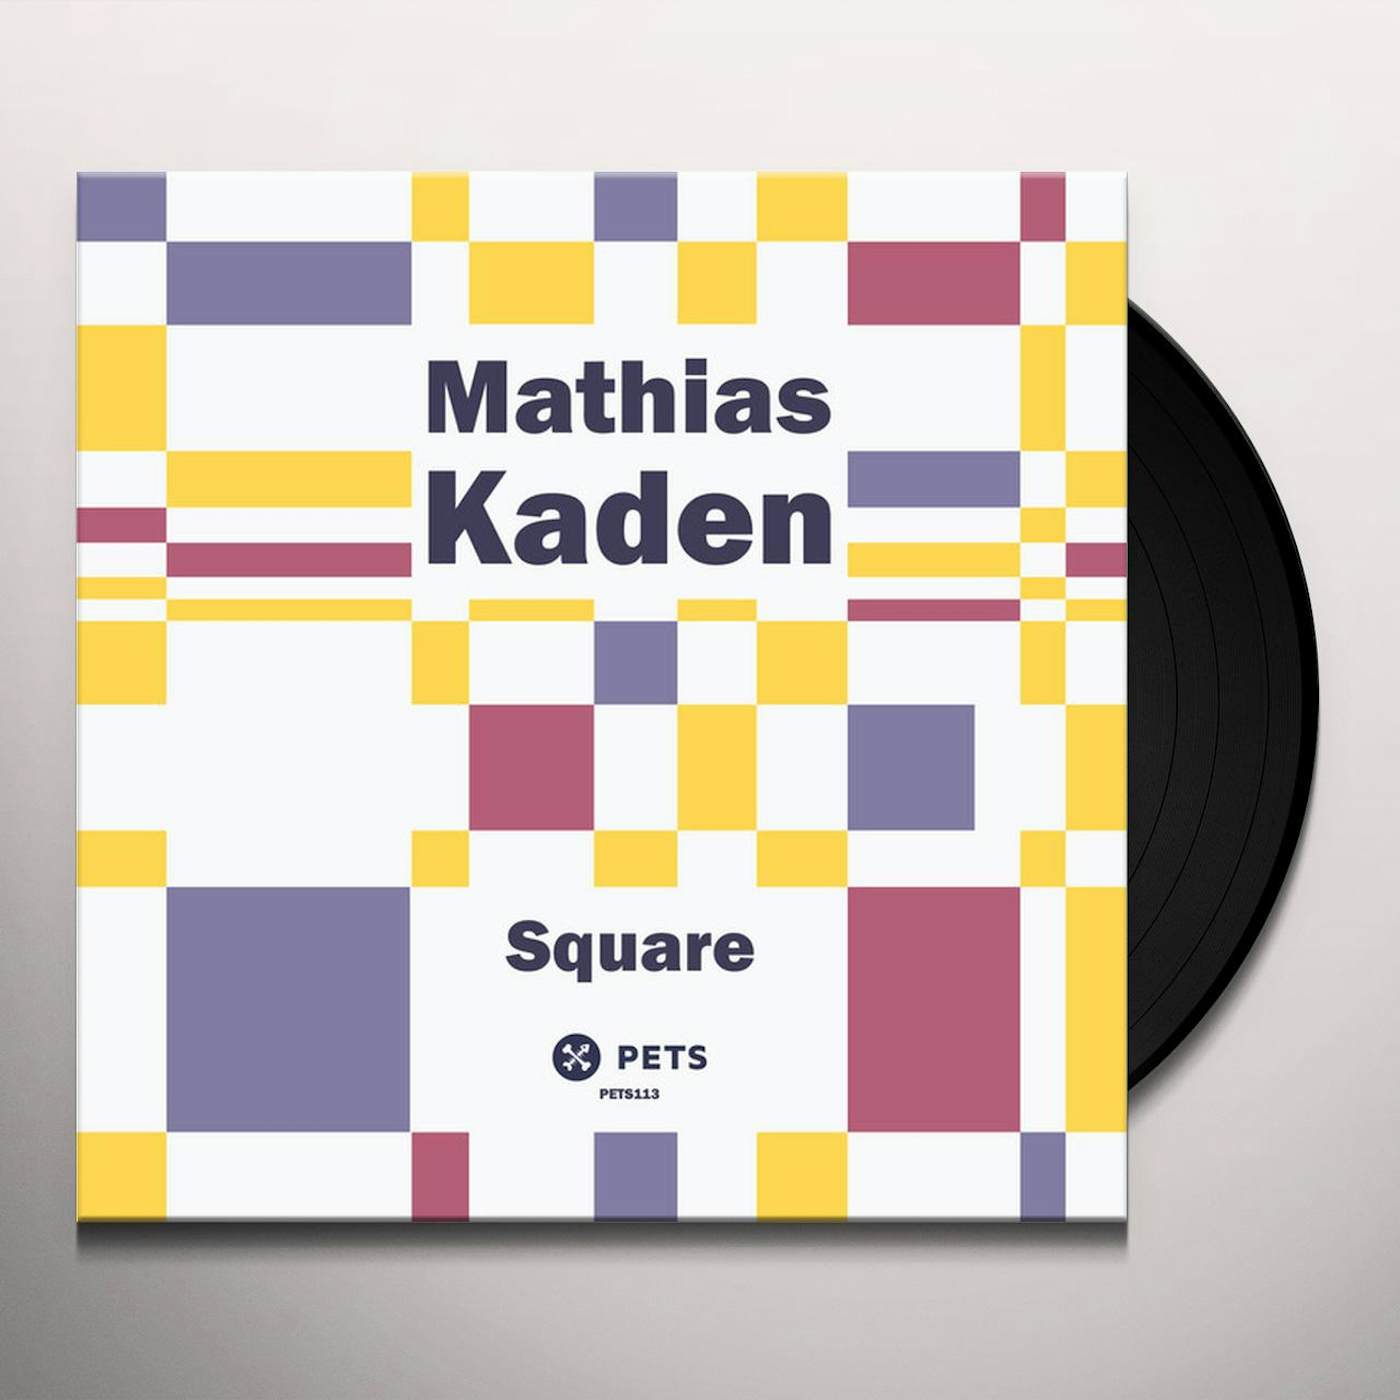 Mathias Kaden Square Vinyl Record